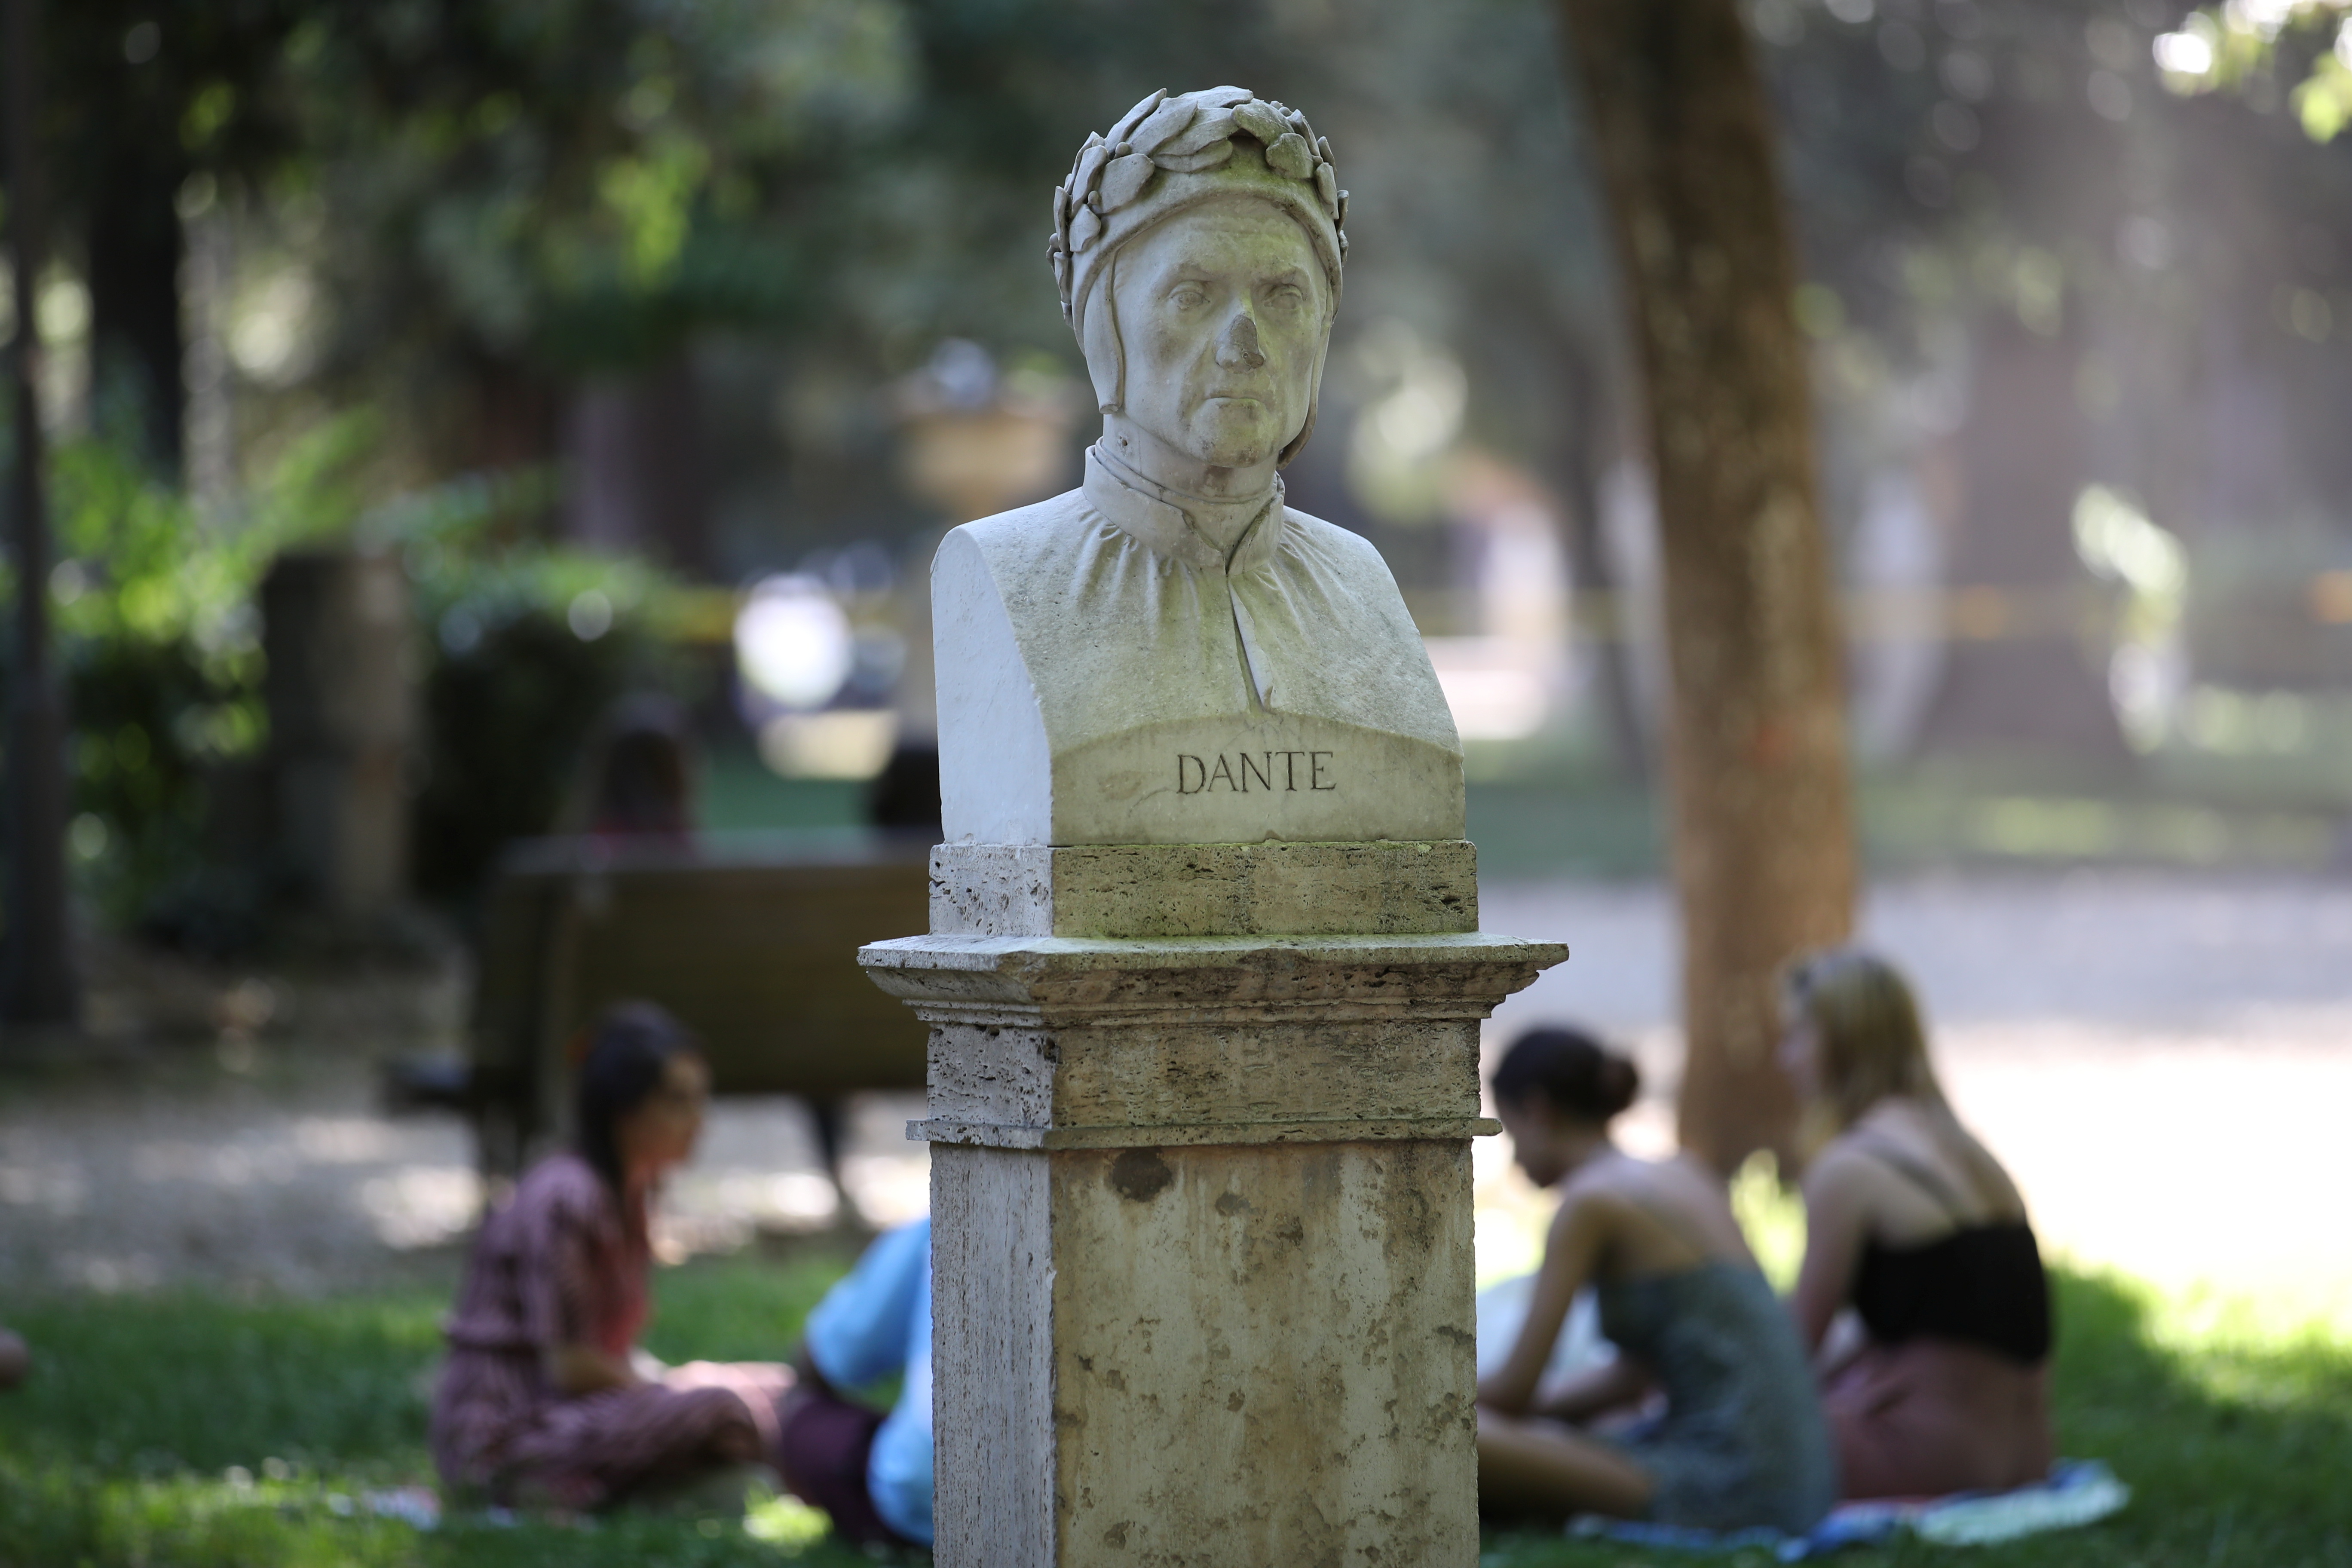 The bust of Italian poet Dante Alighieri is seen at Villa Borghese park, in Rome, Italy June 1, 2021. Picture taken June 1, 2021. REUTERS/Yara Nardi